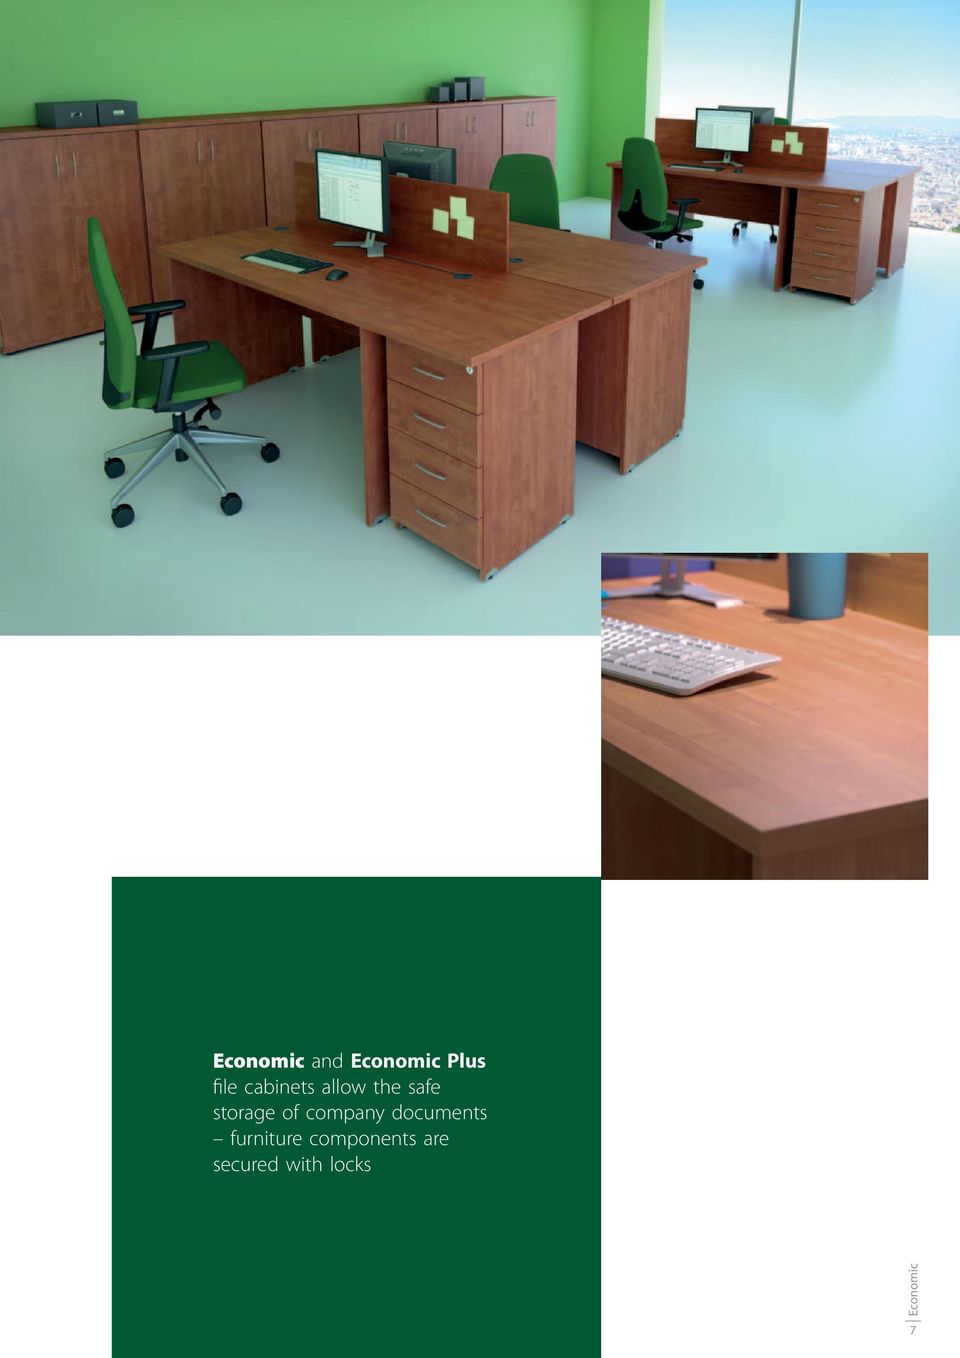 company documents furniture